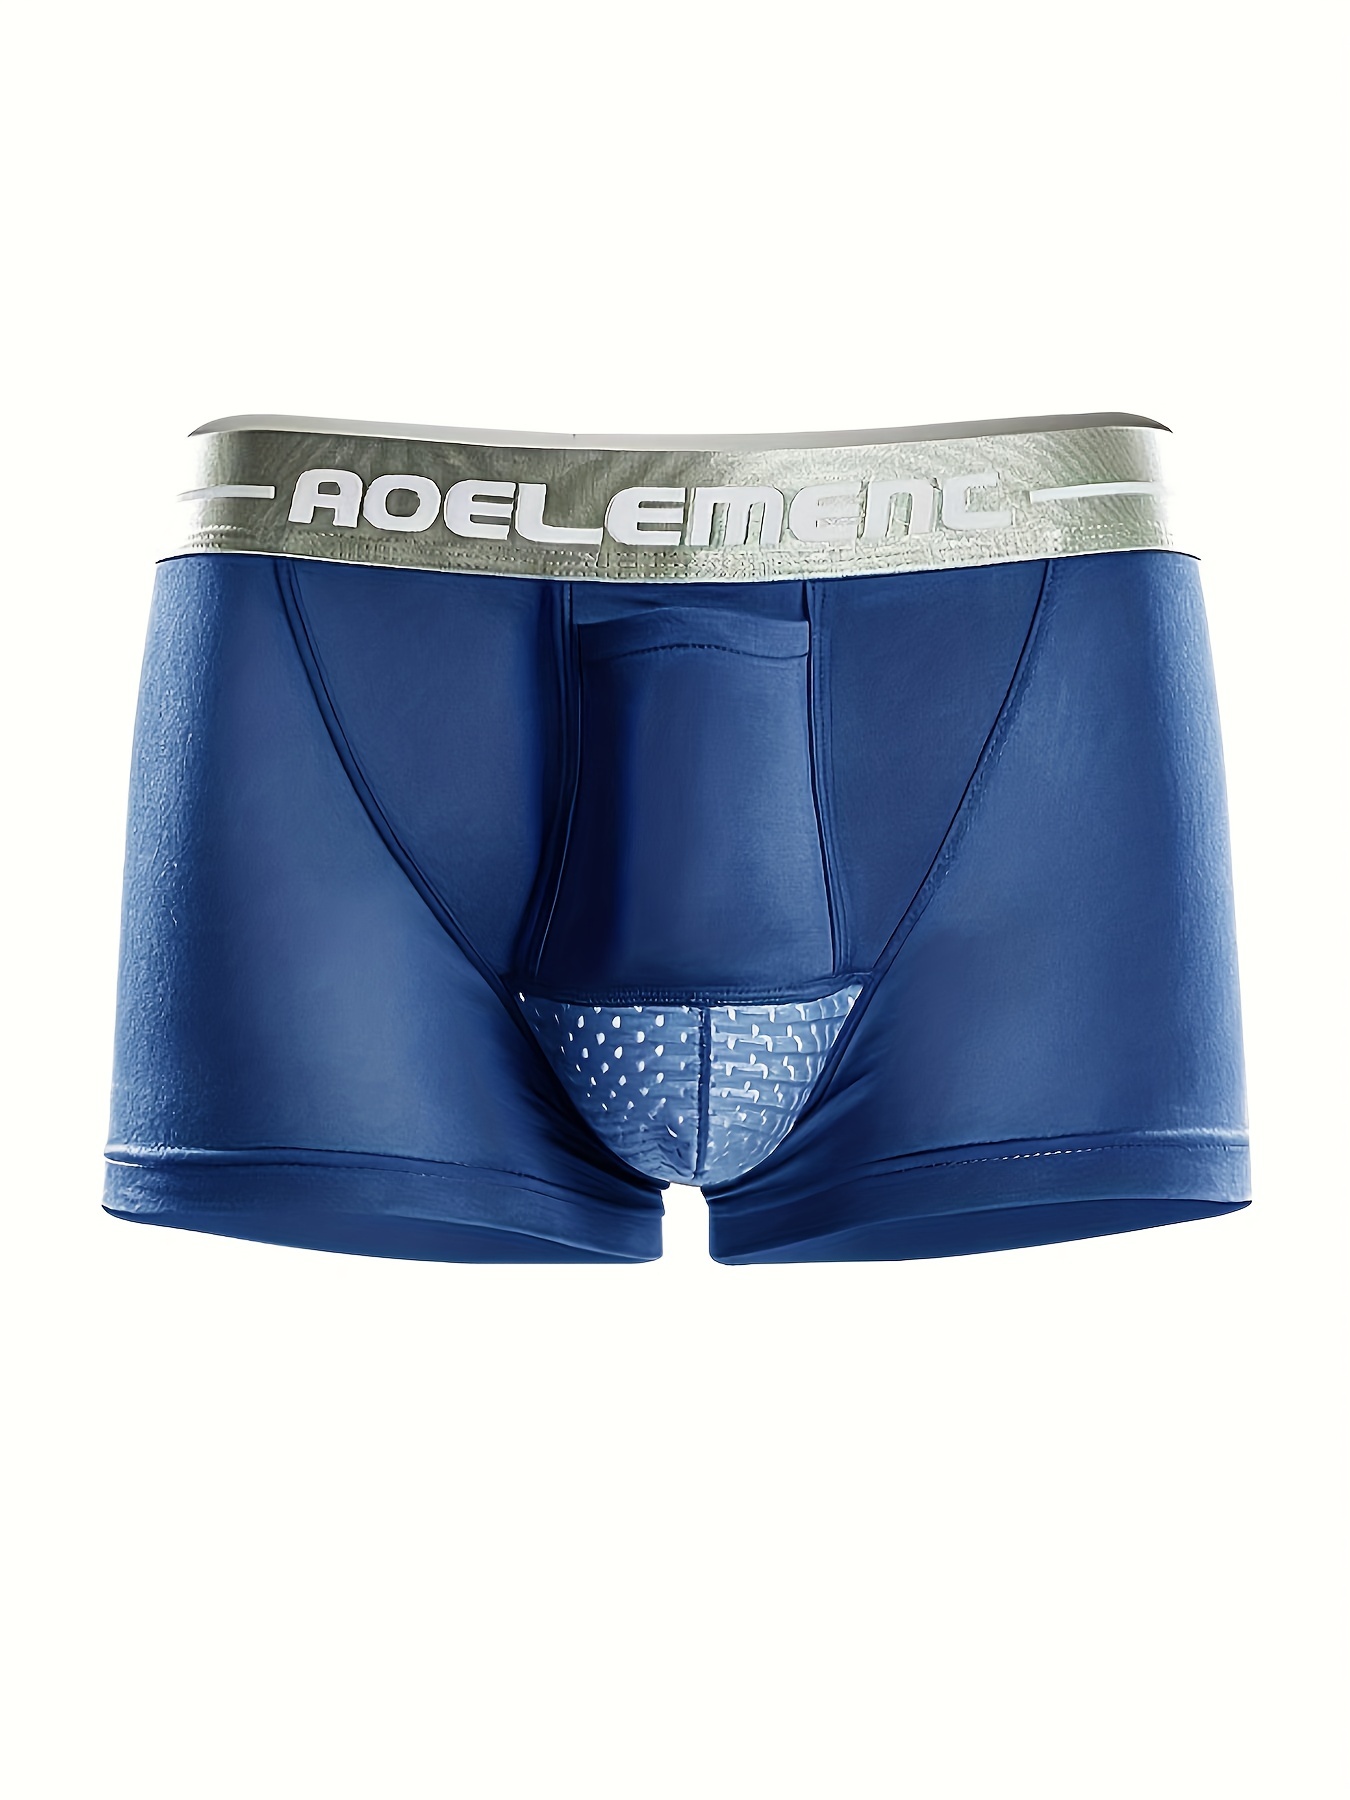 1pc Men's Ultra Thin Breathable Soft Boxer Briefs Underwear For Summer